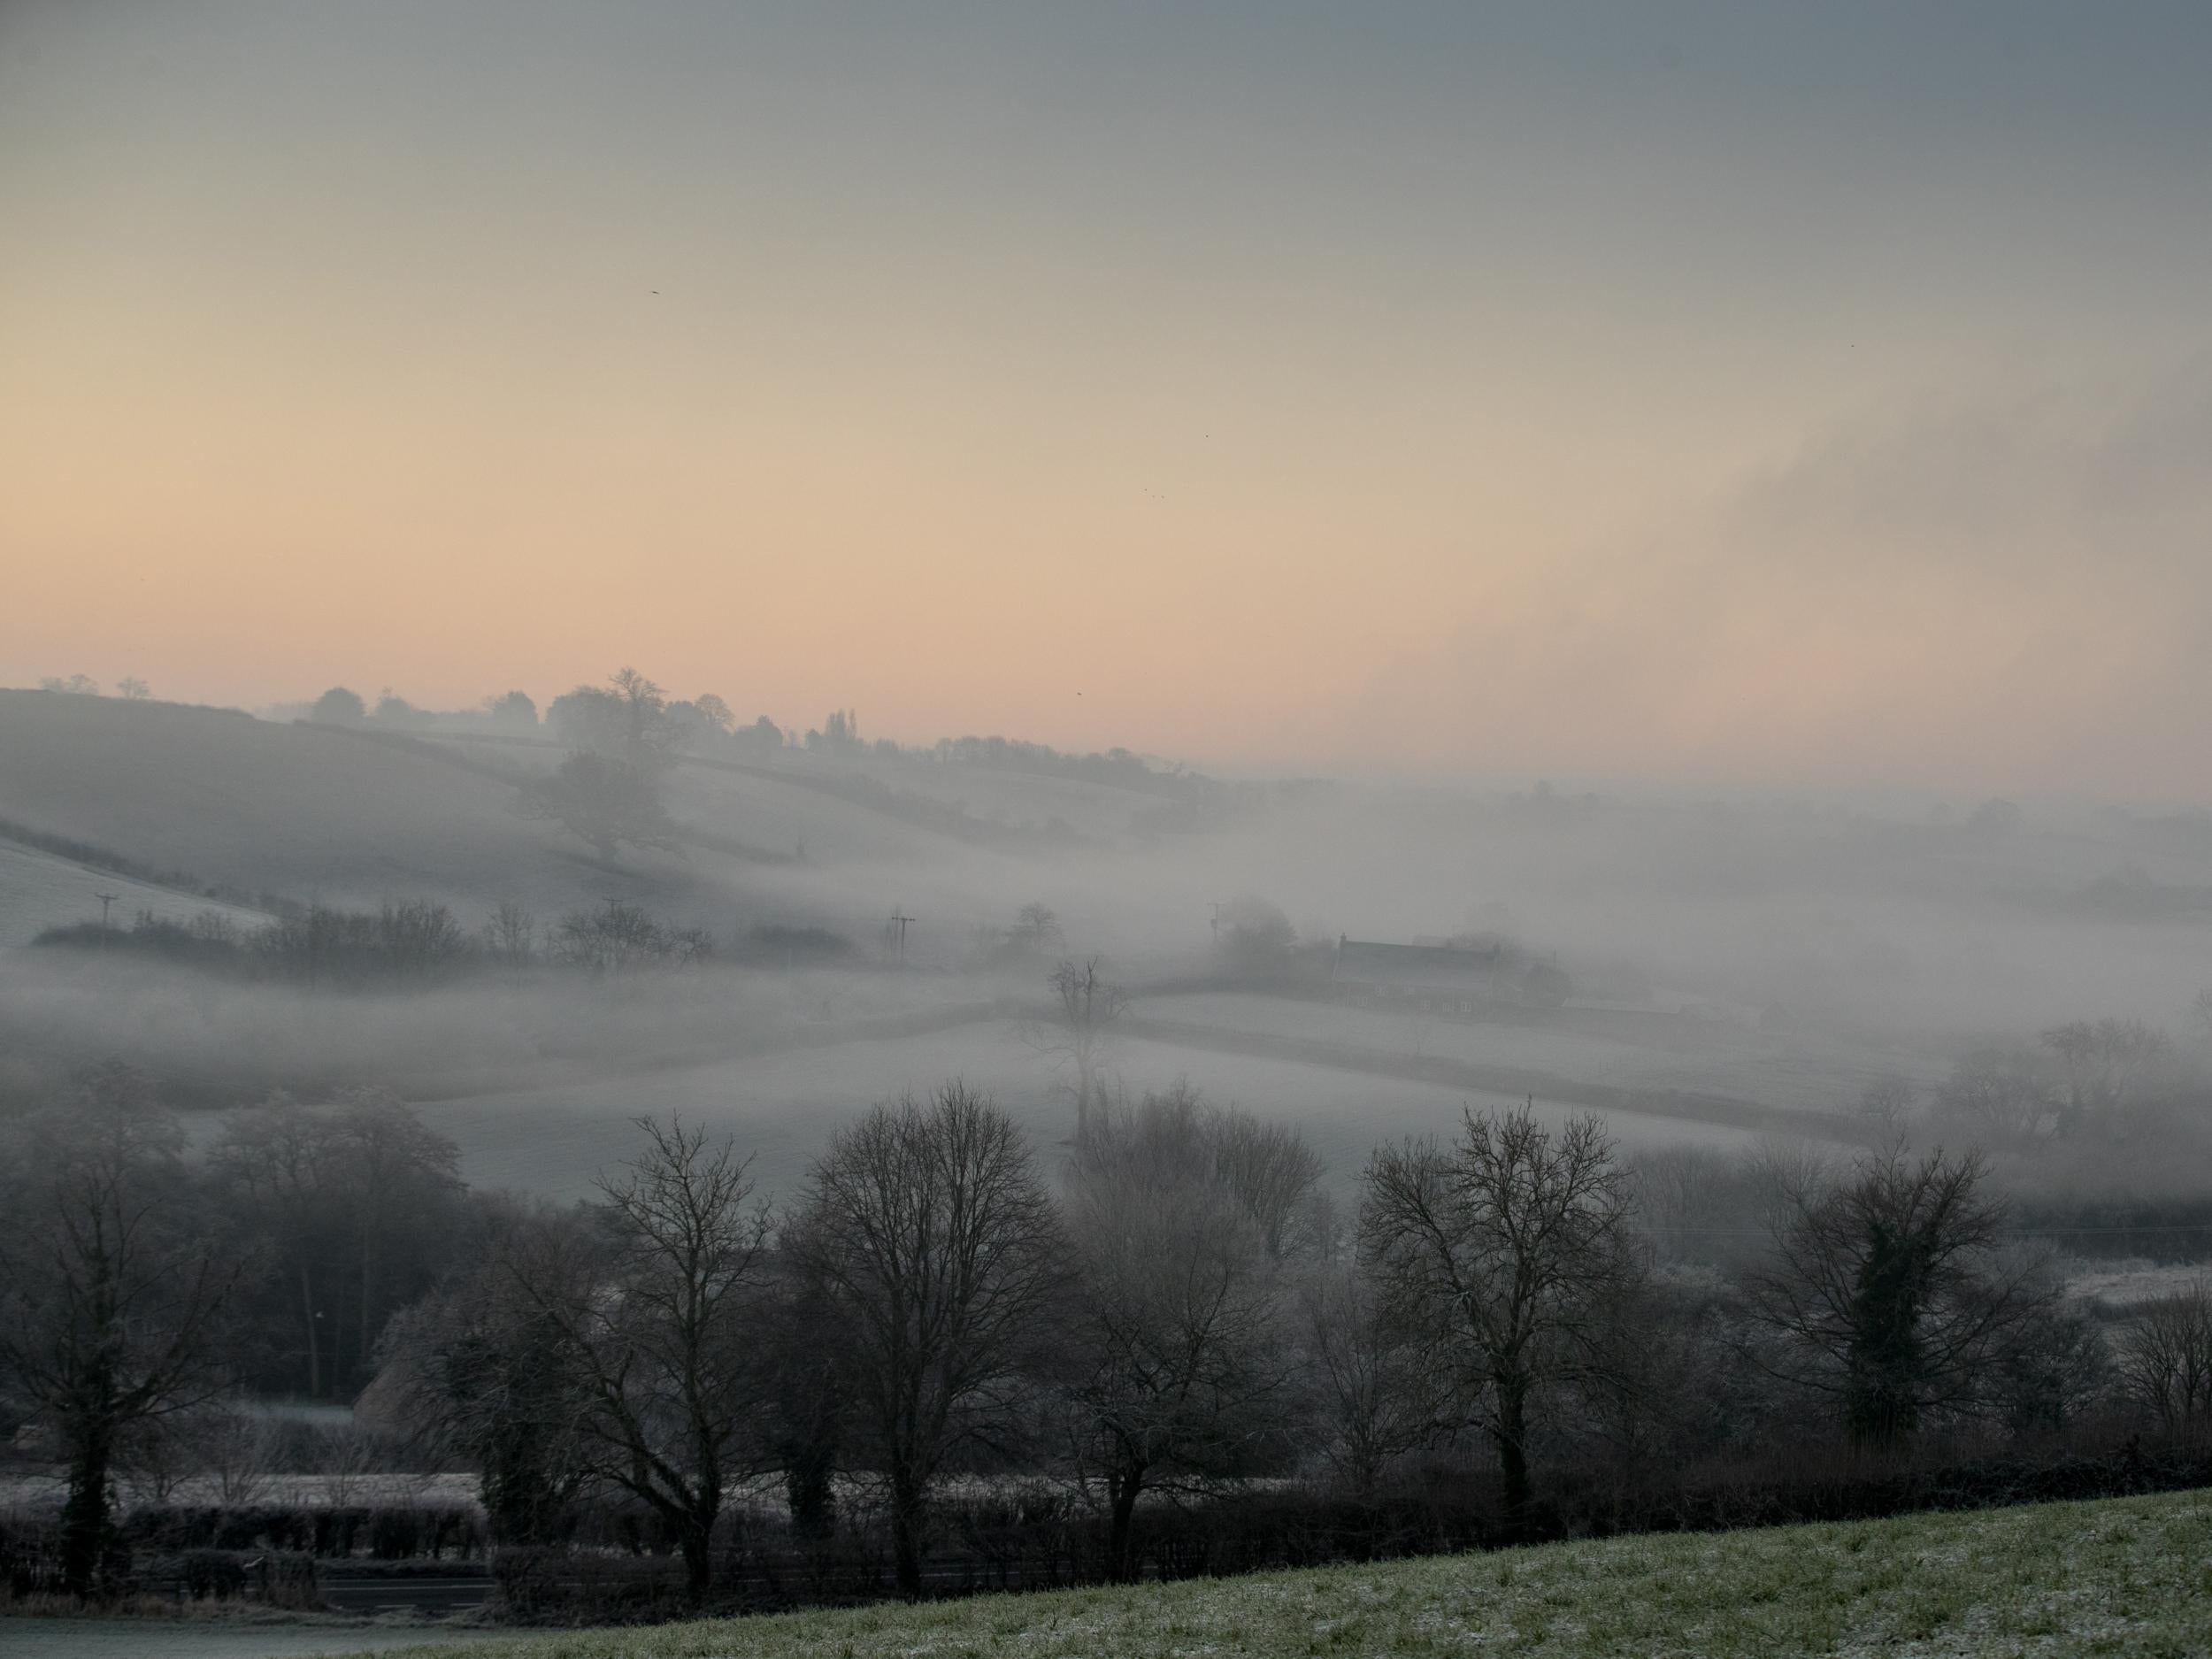 Early morning fog in Radstock, England, on 29 December